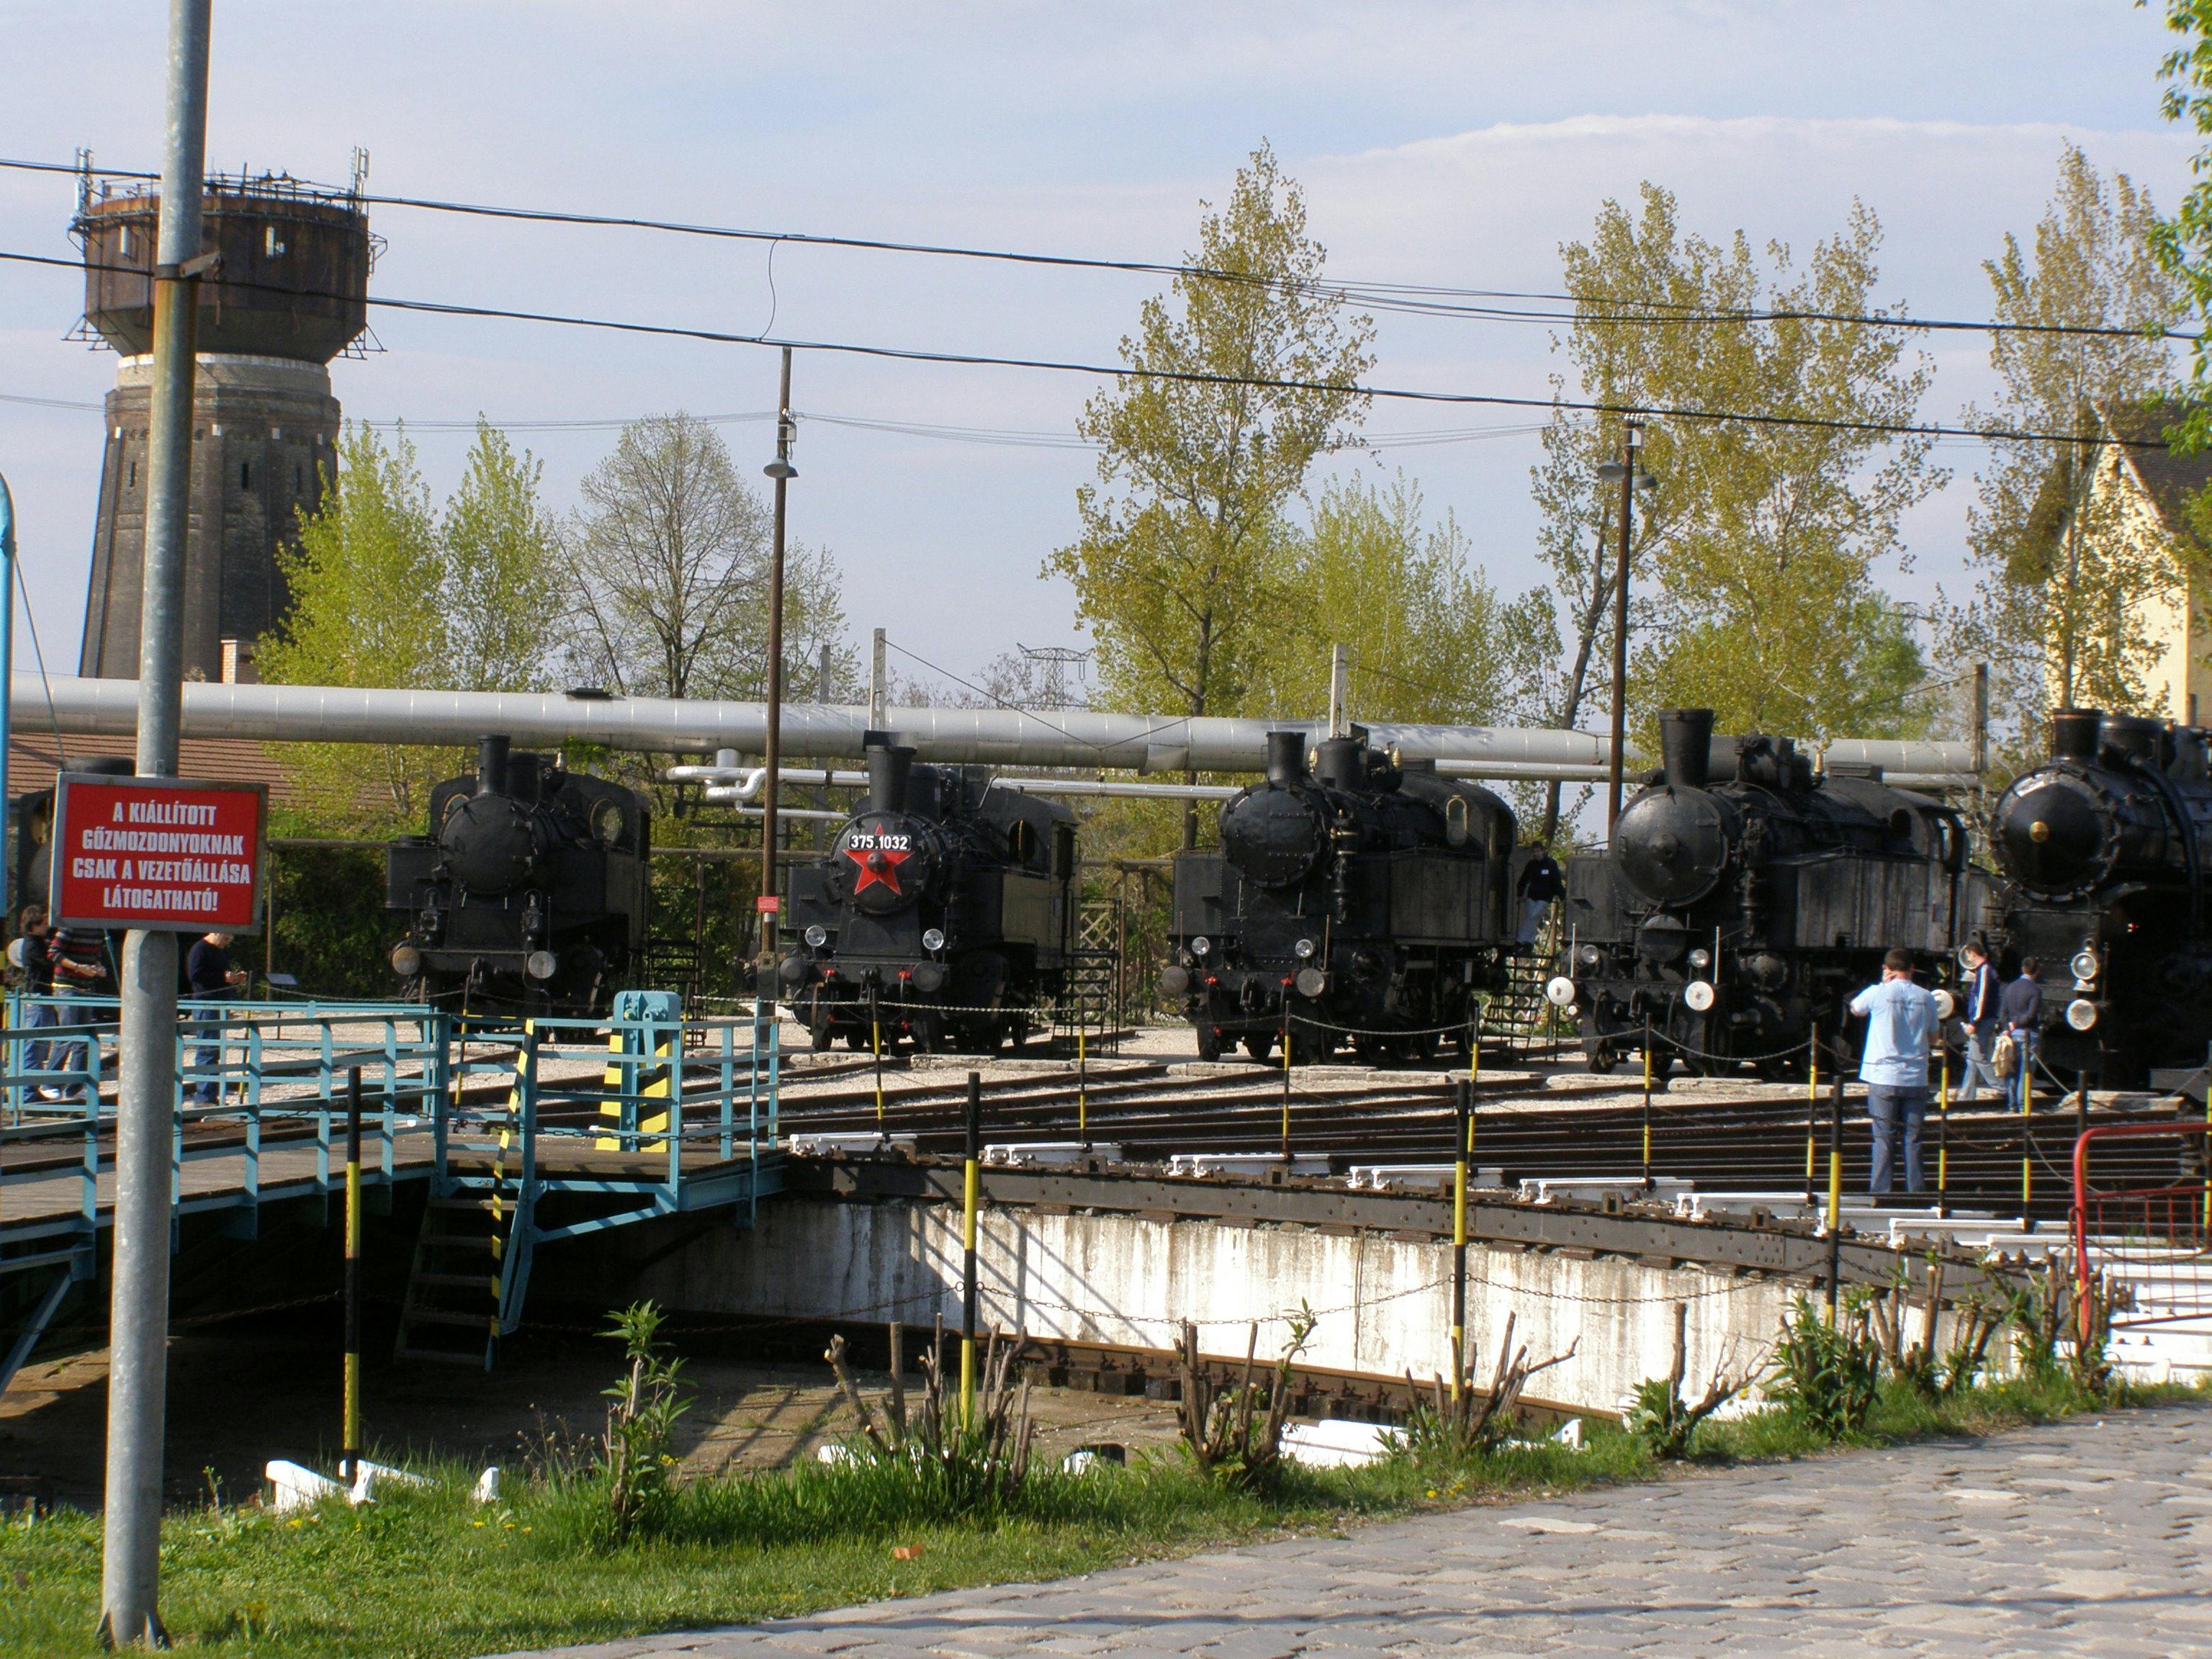 Free stock photo of classic locomotive, locomotive, steam locomotive